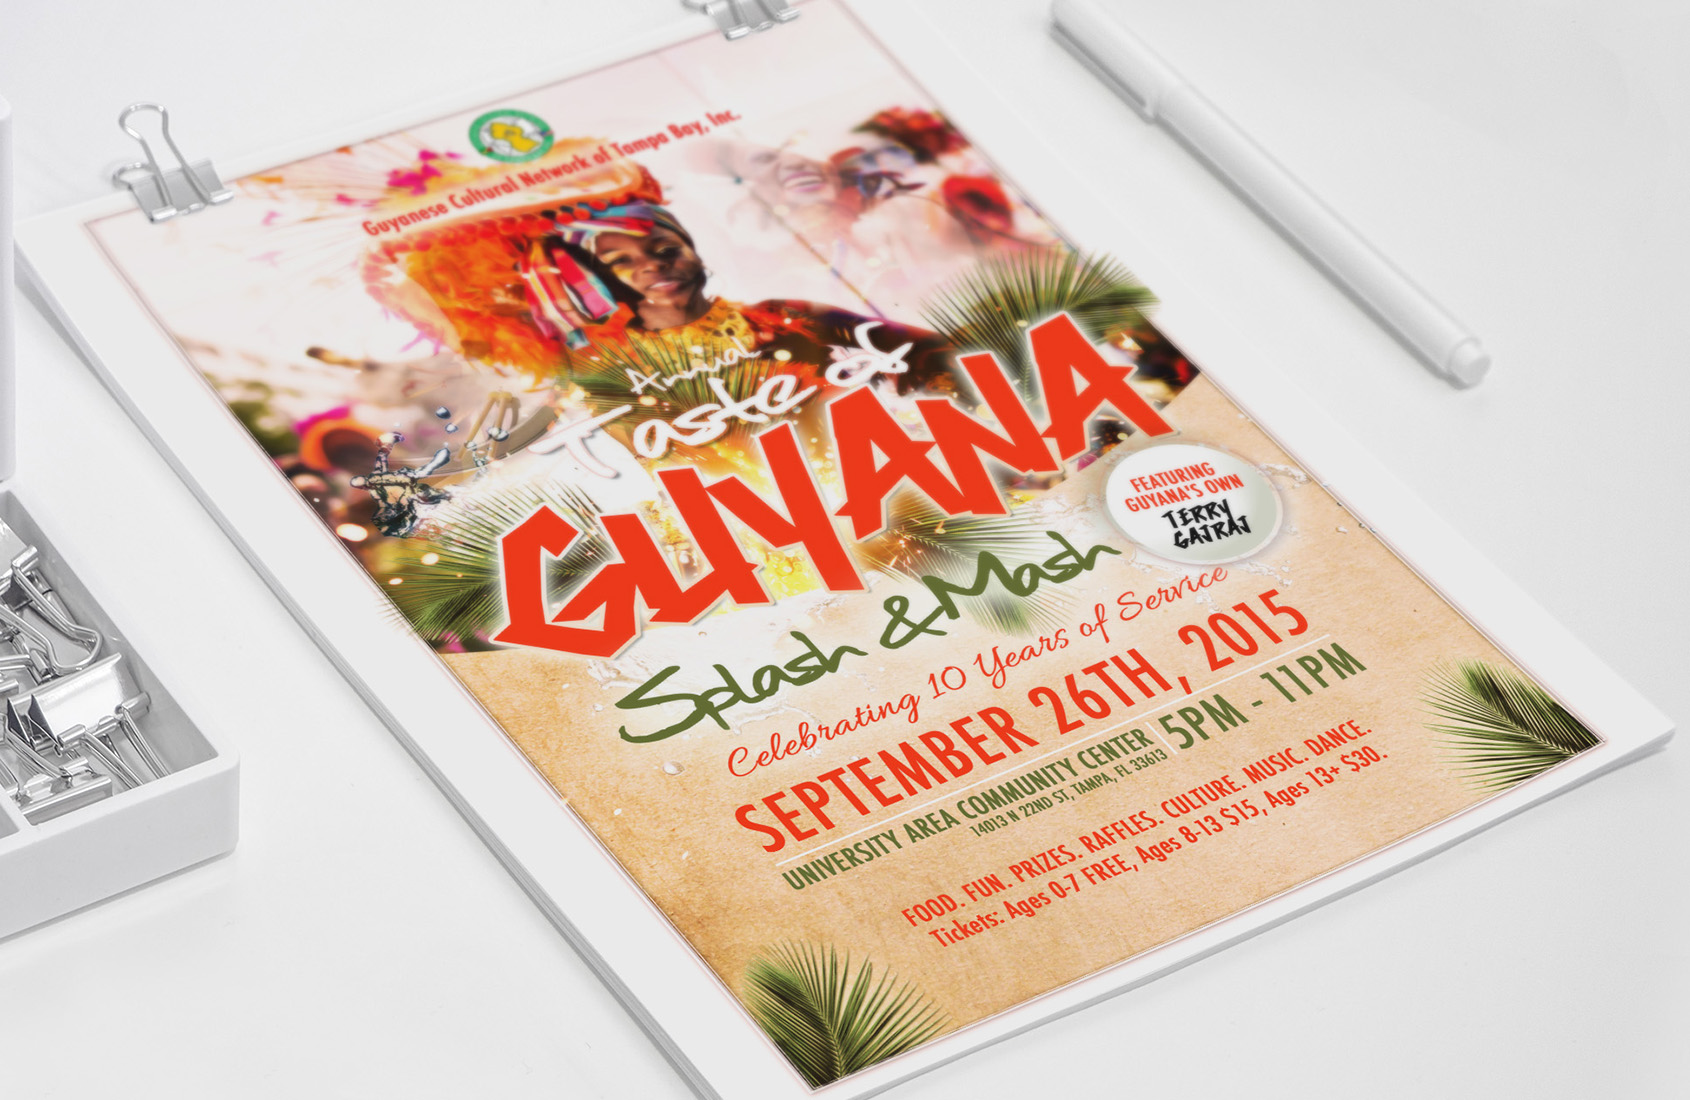 GCNTB Taste of Guyana 2015